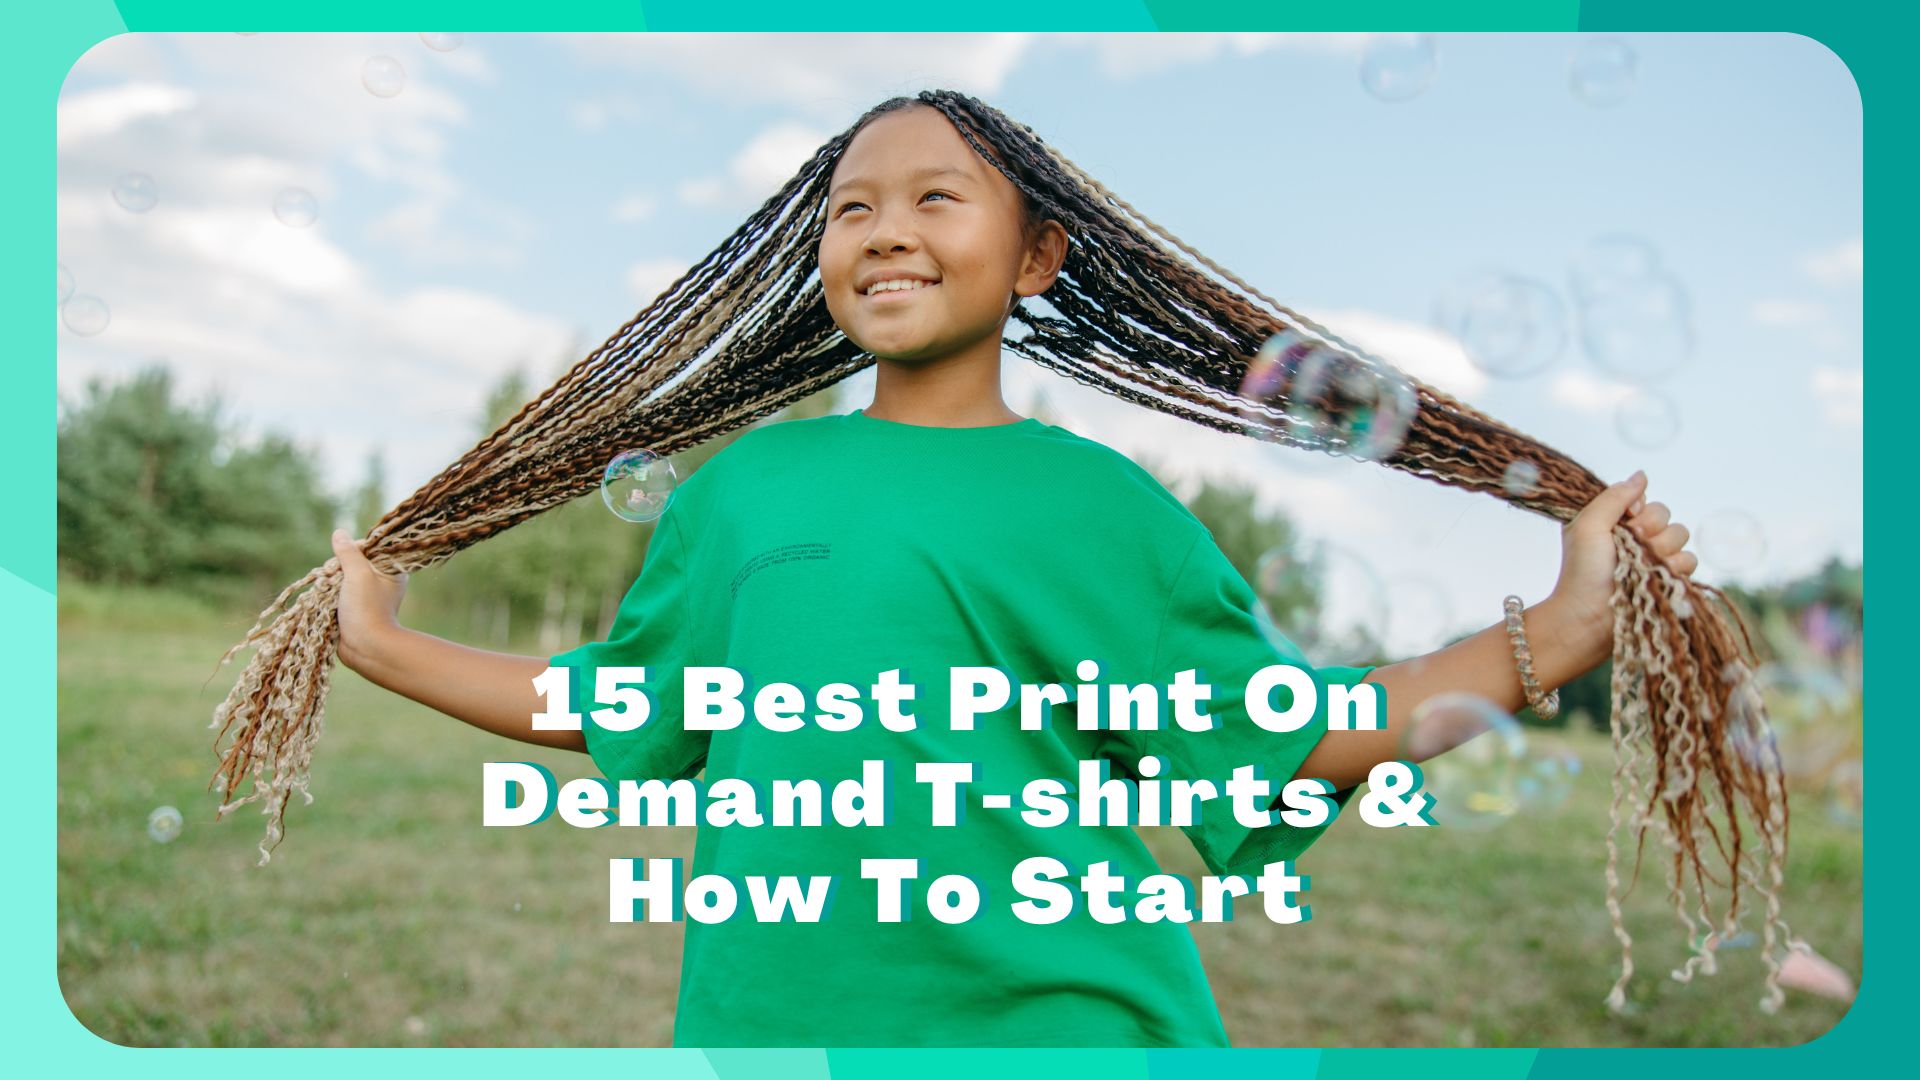 Print On Demand T-shirts